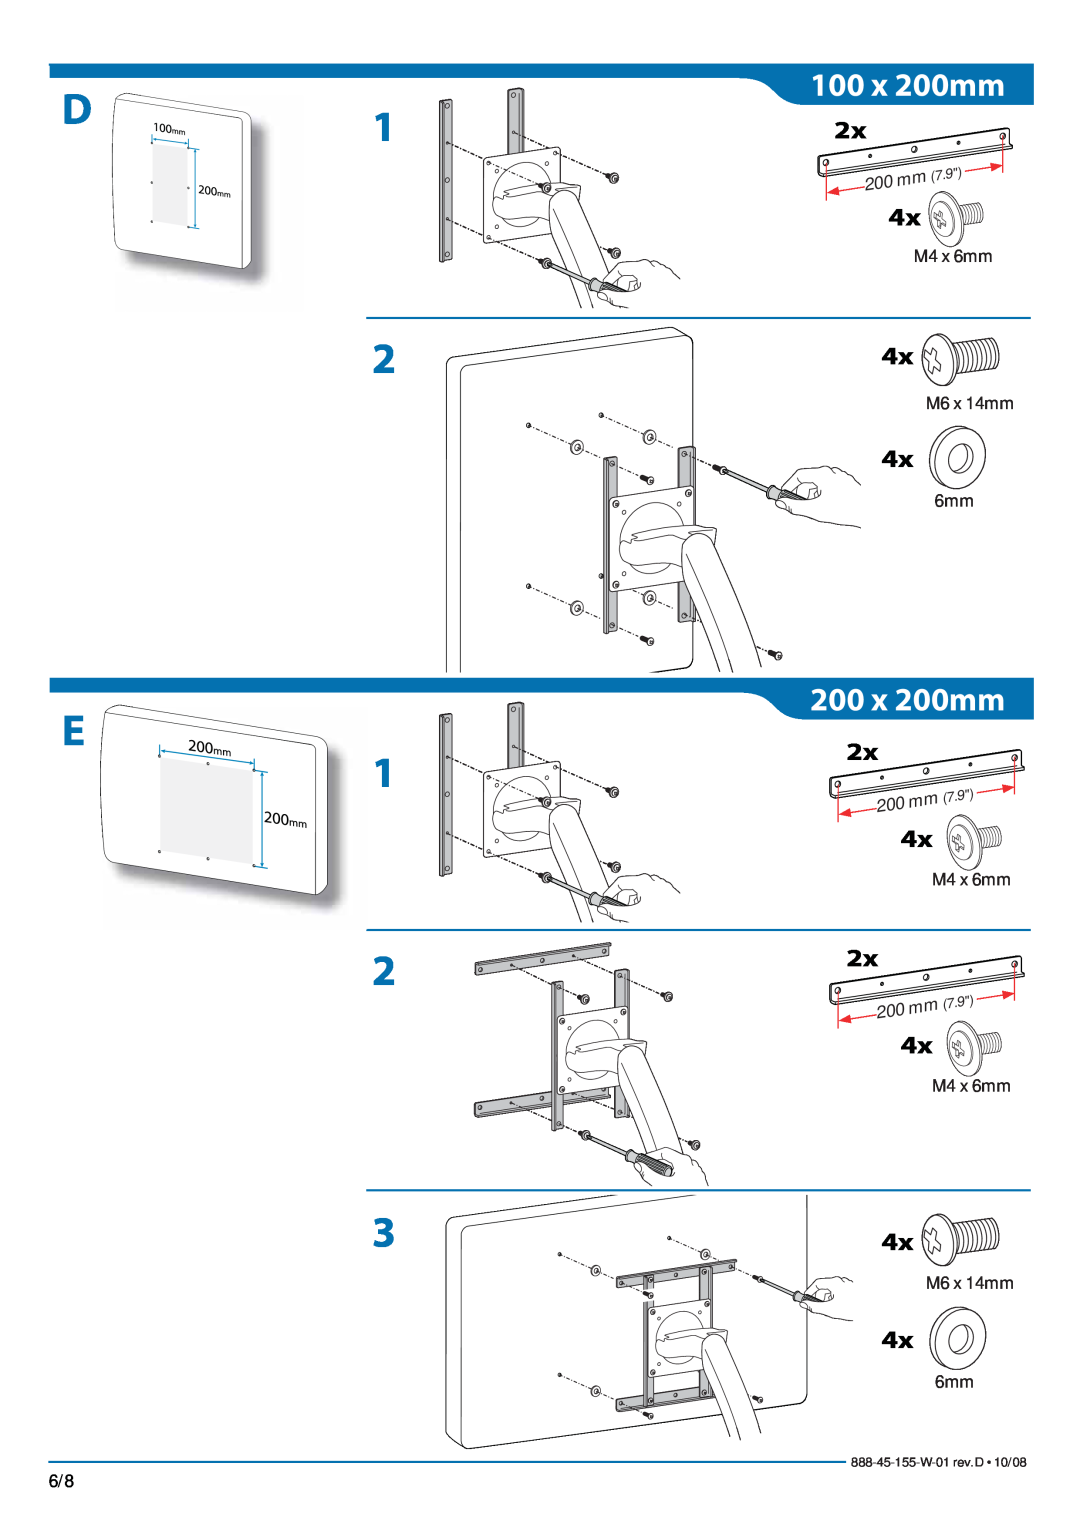 Ergotron Desk Mount LCD Arm manual 2 E, 100 x 200mm, 200 x 200mm 